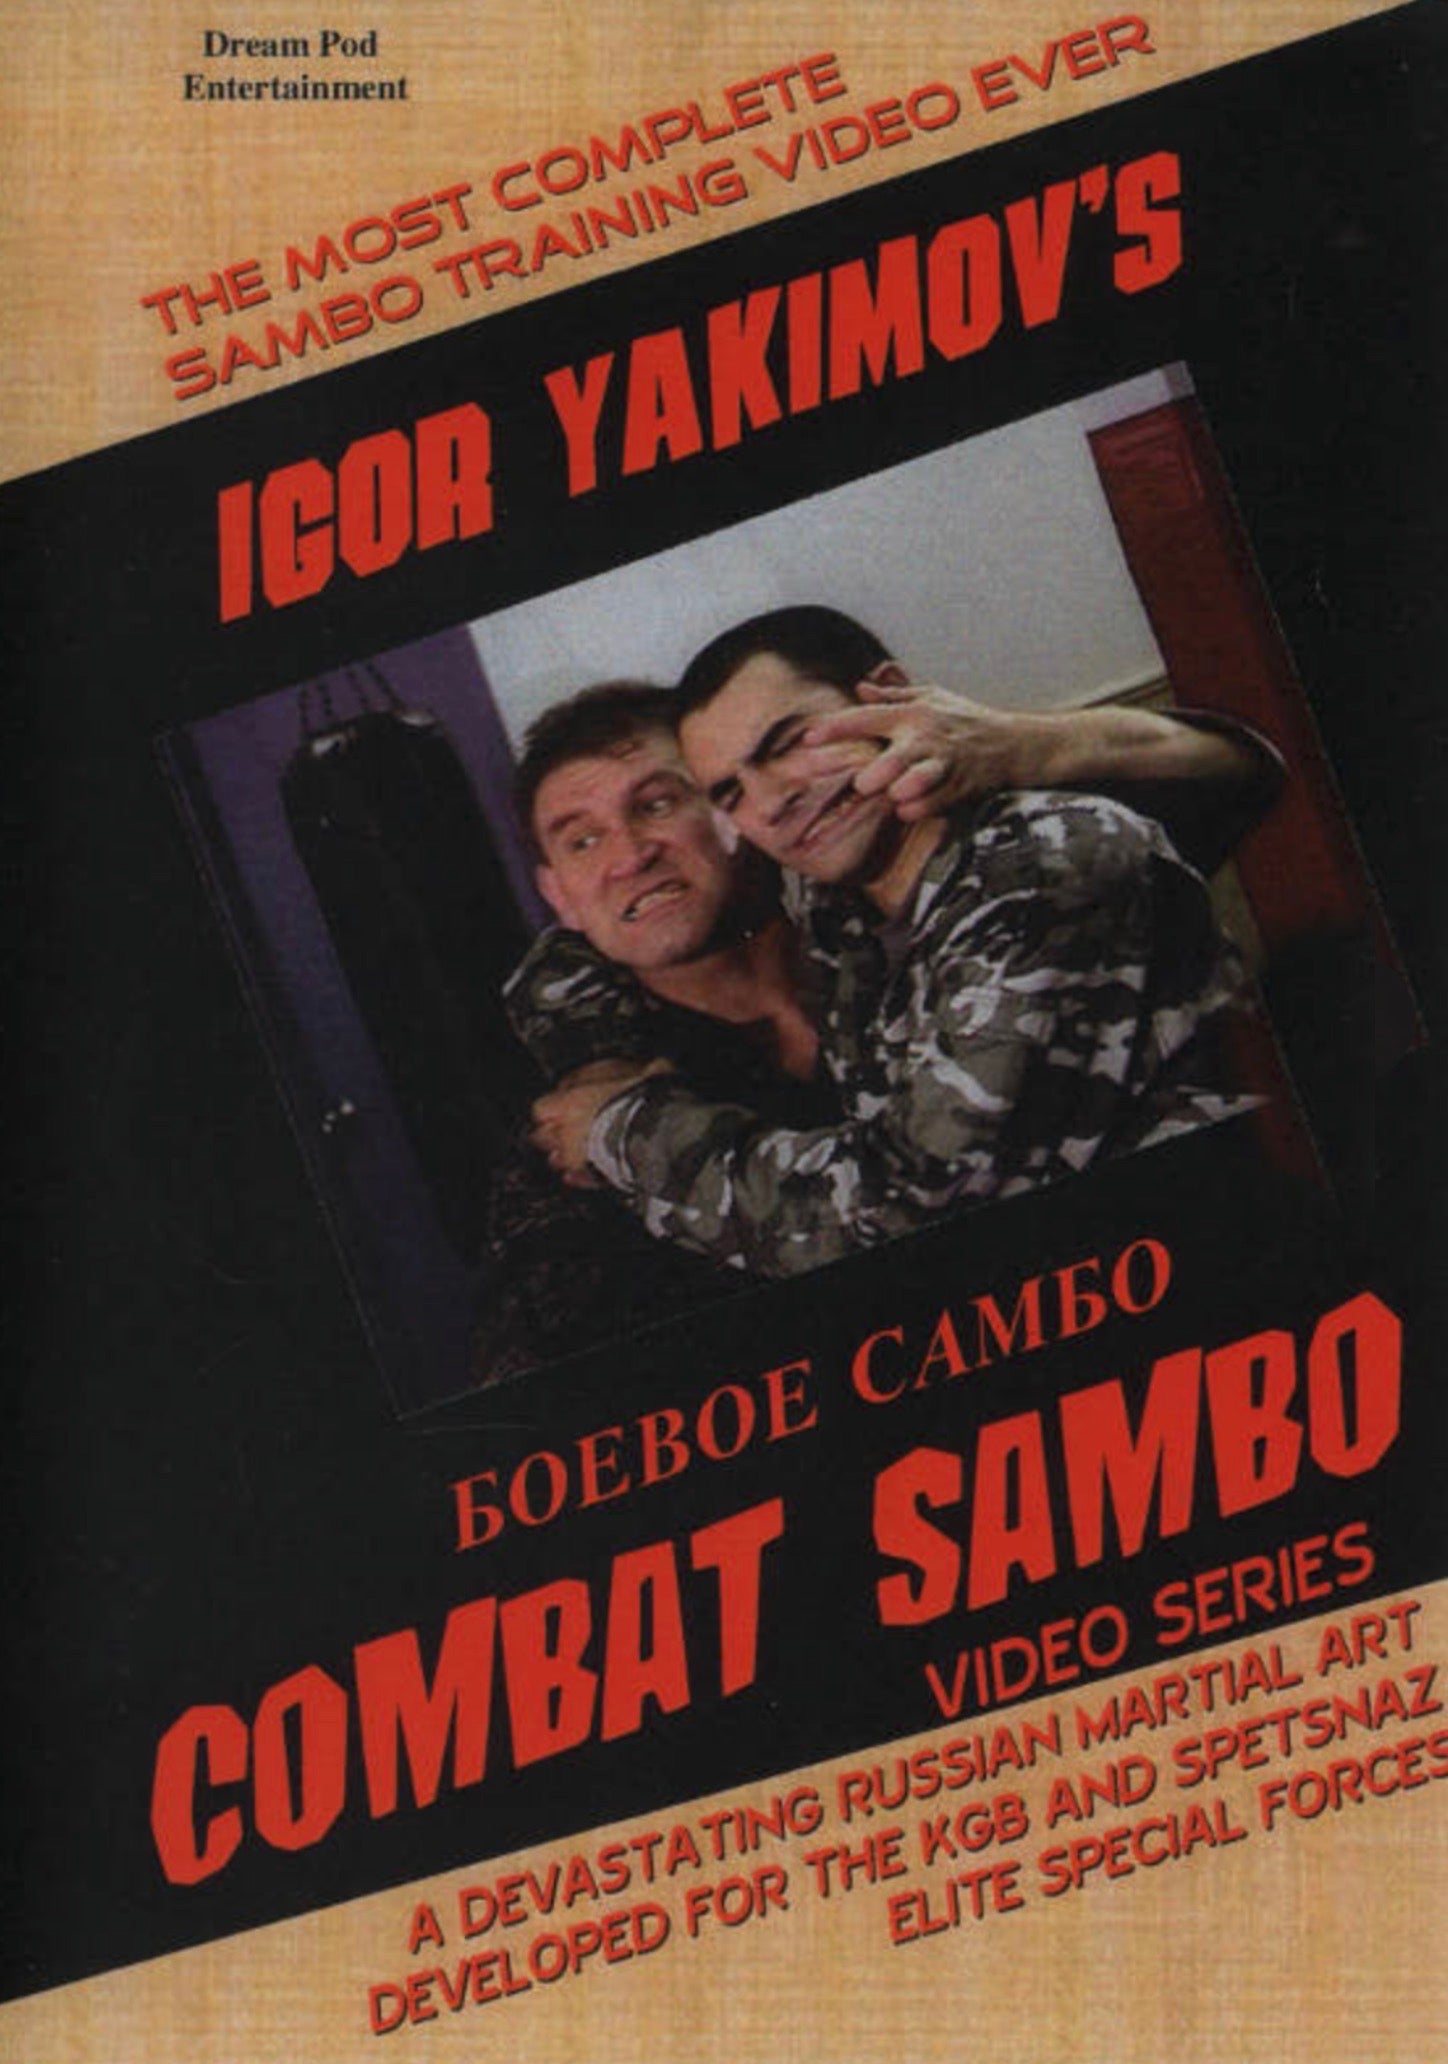 Juego de DVD Combat Sambo 6 de Igor Yakimov